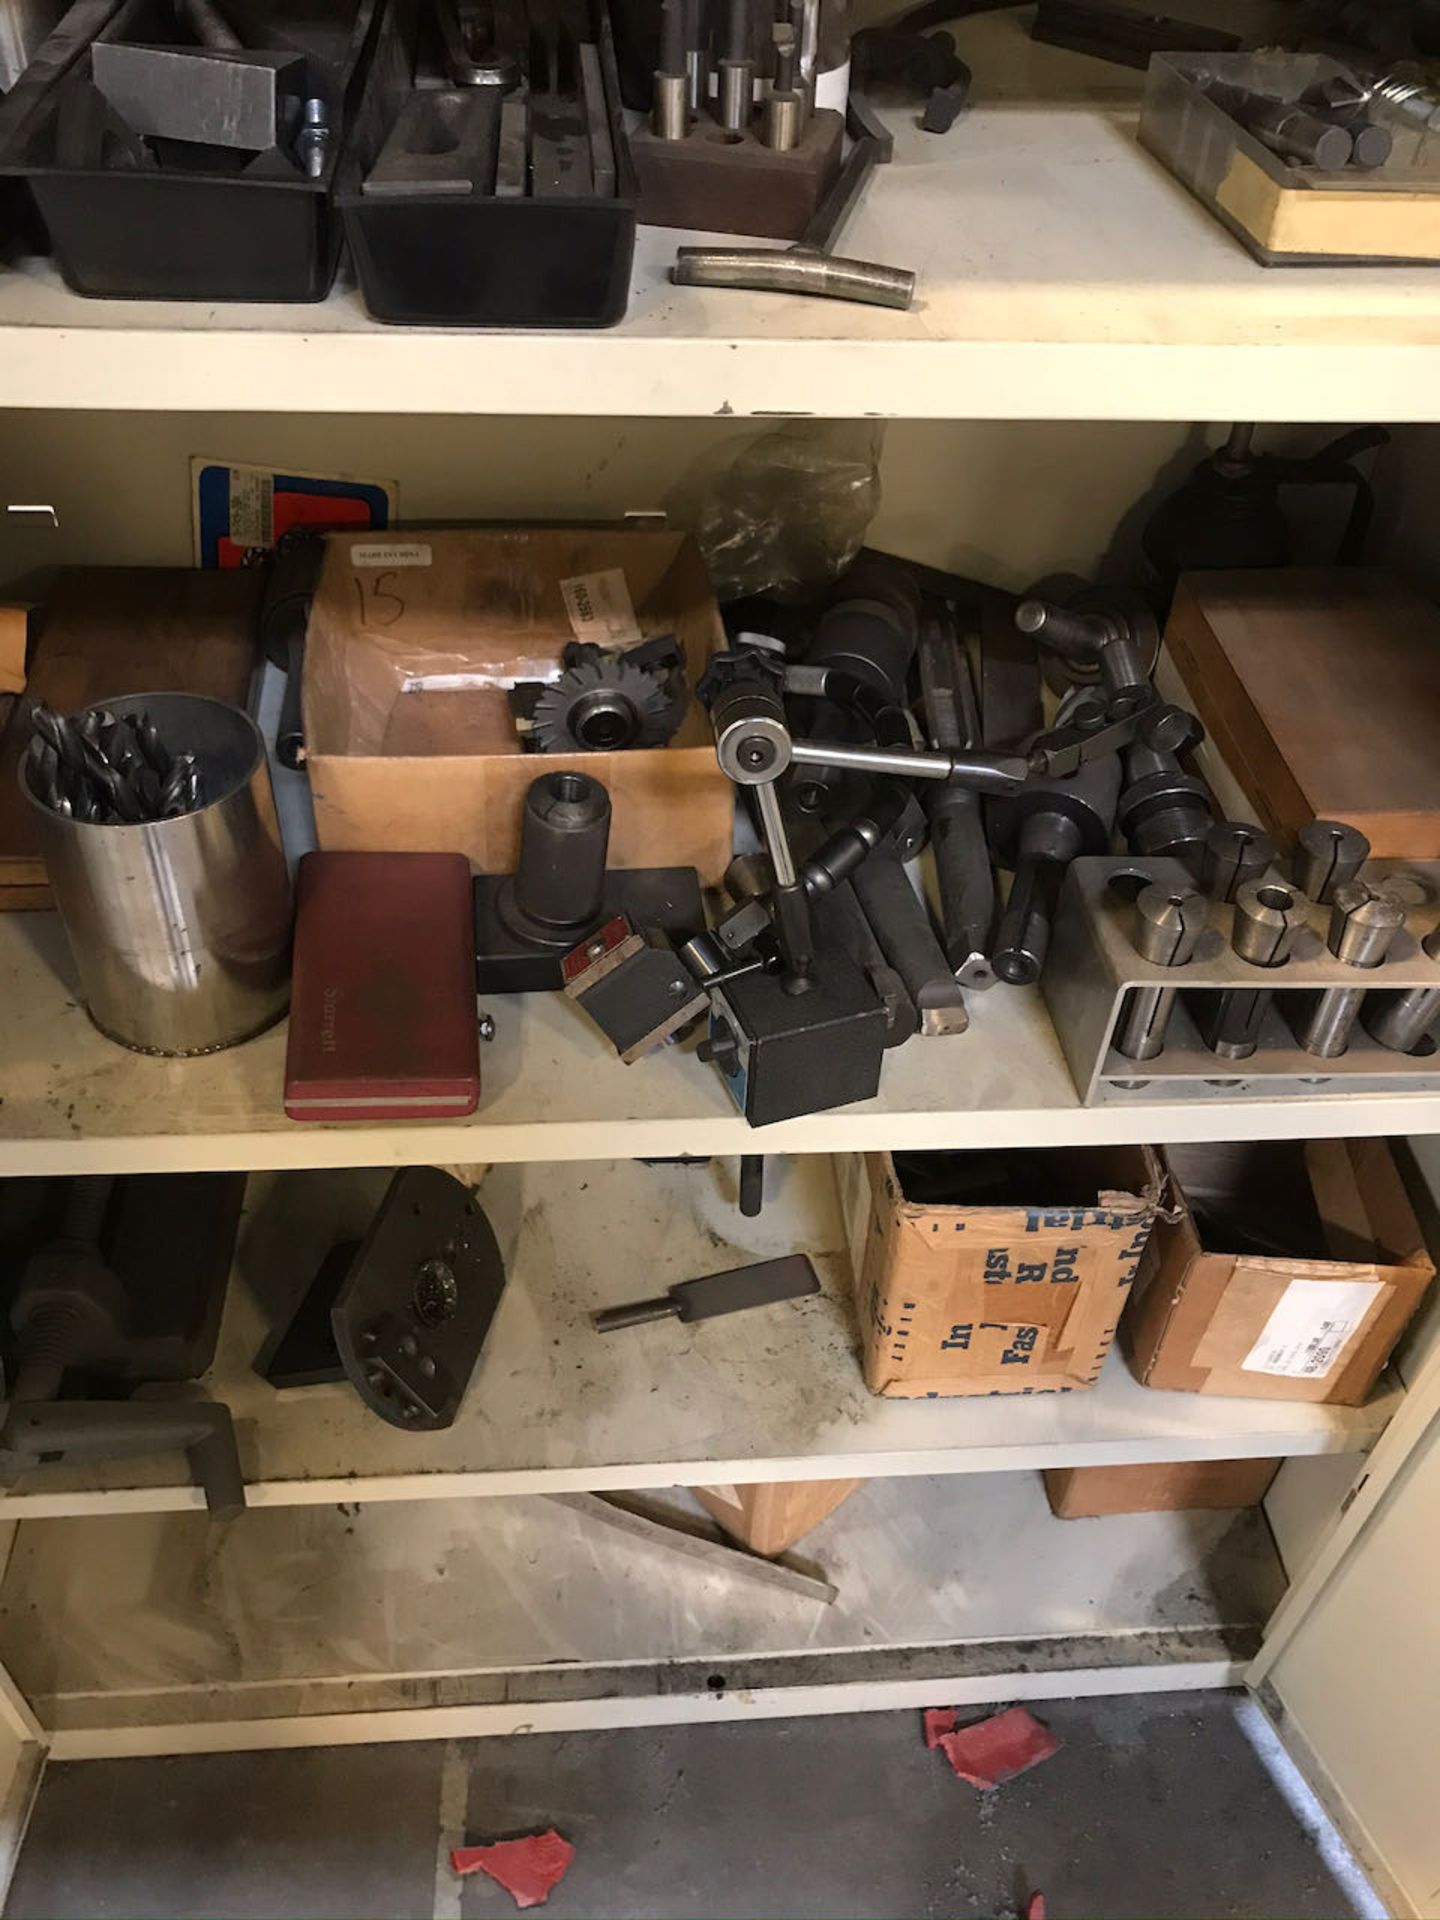 Cabinet with machine bits